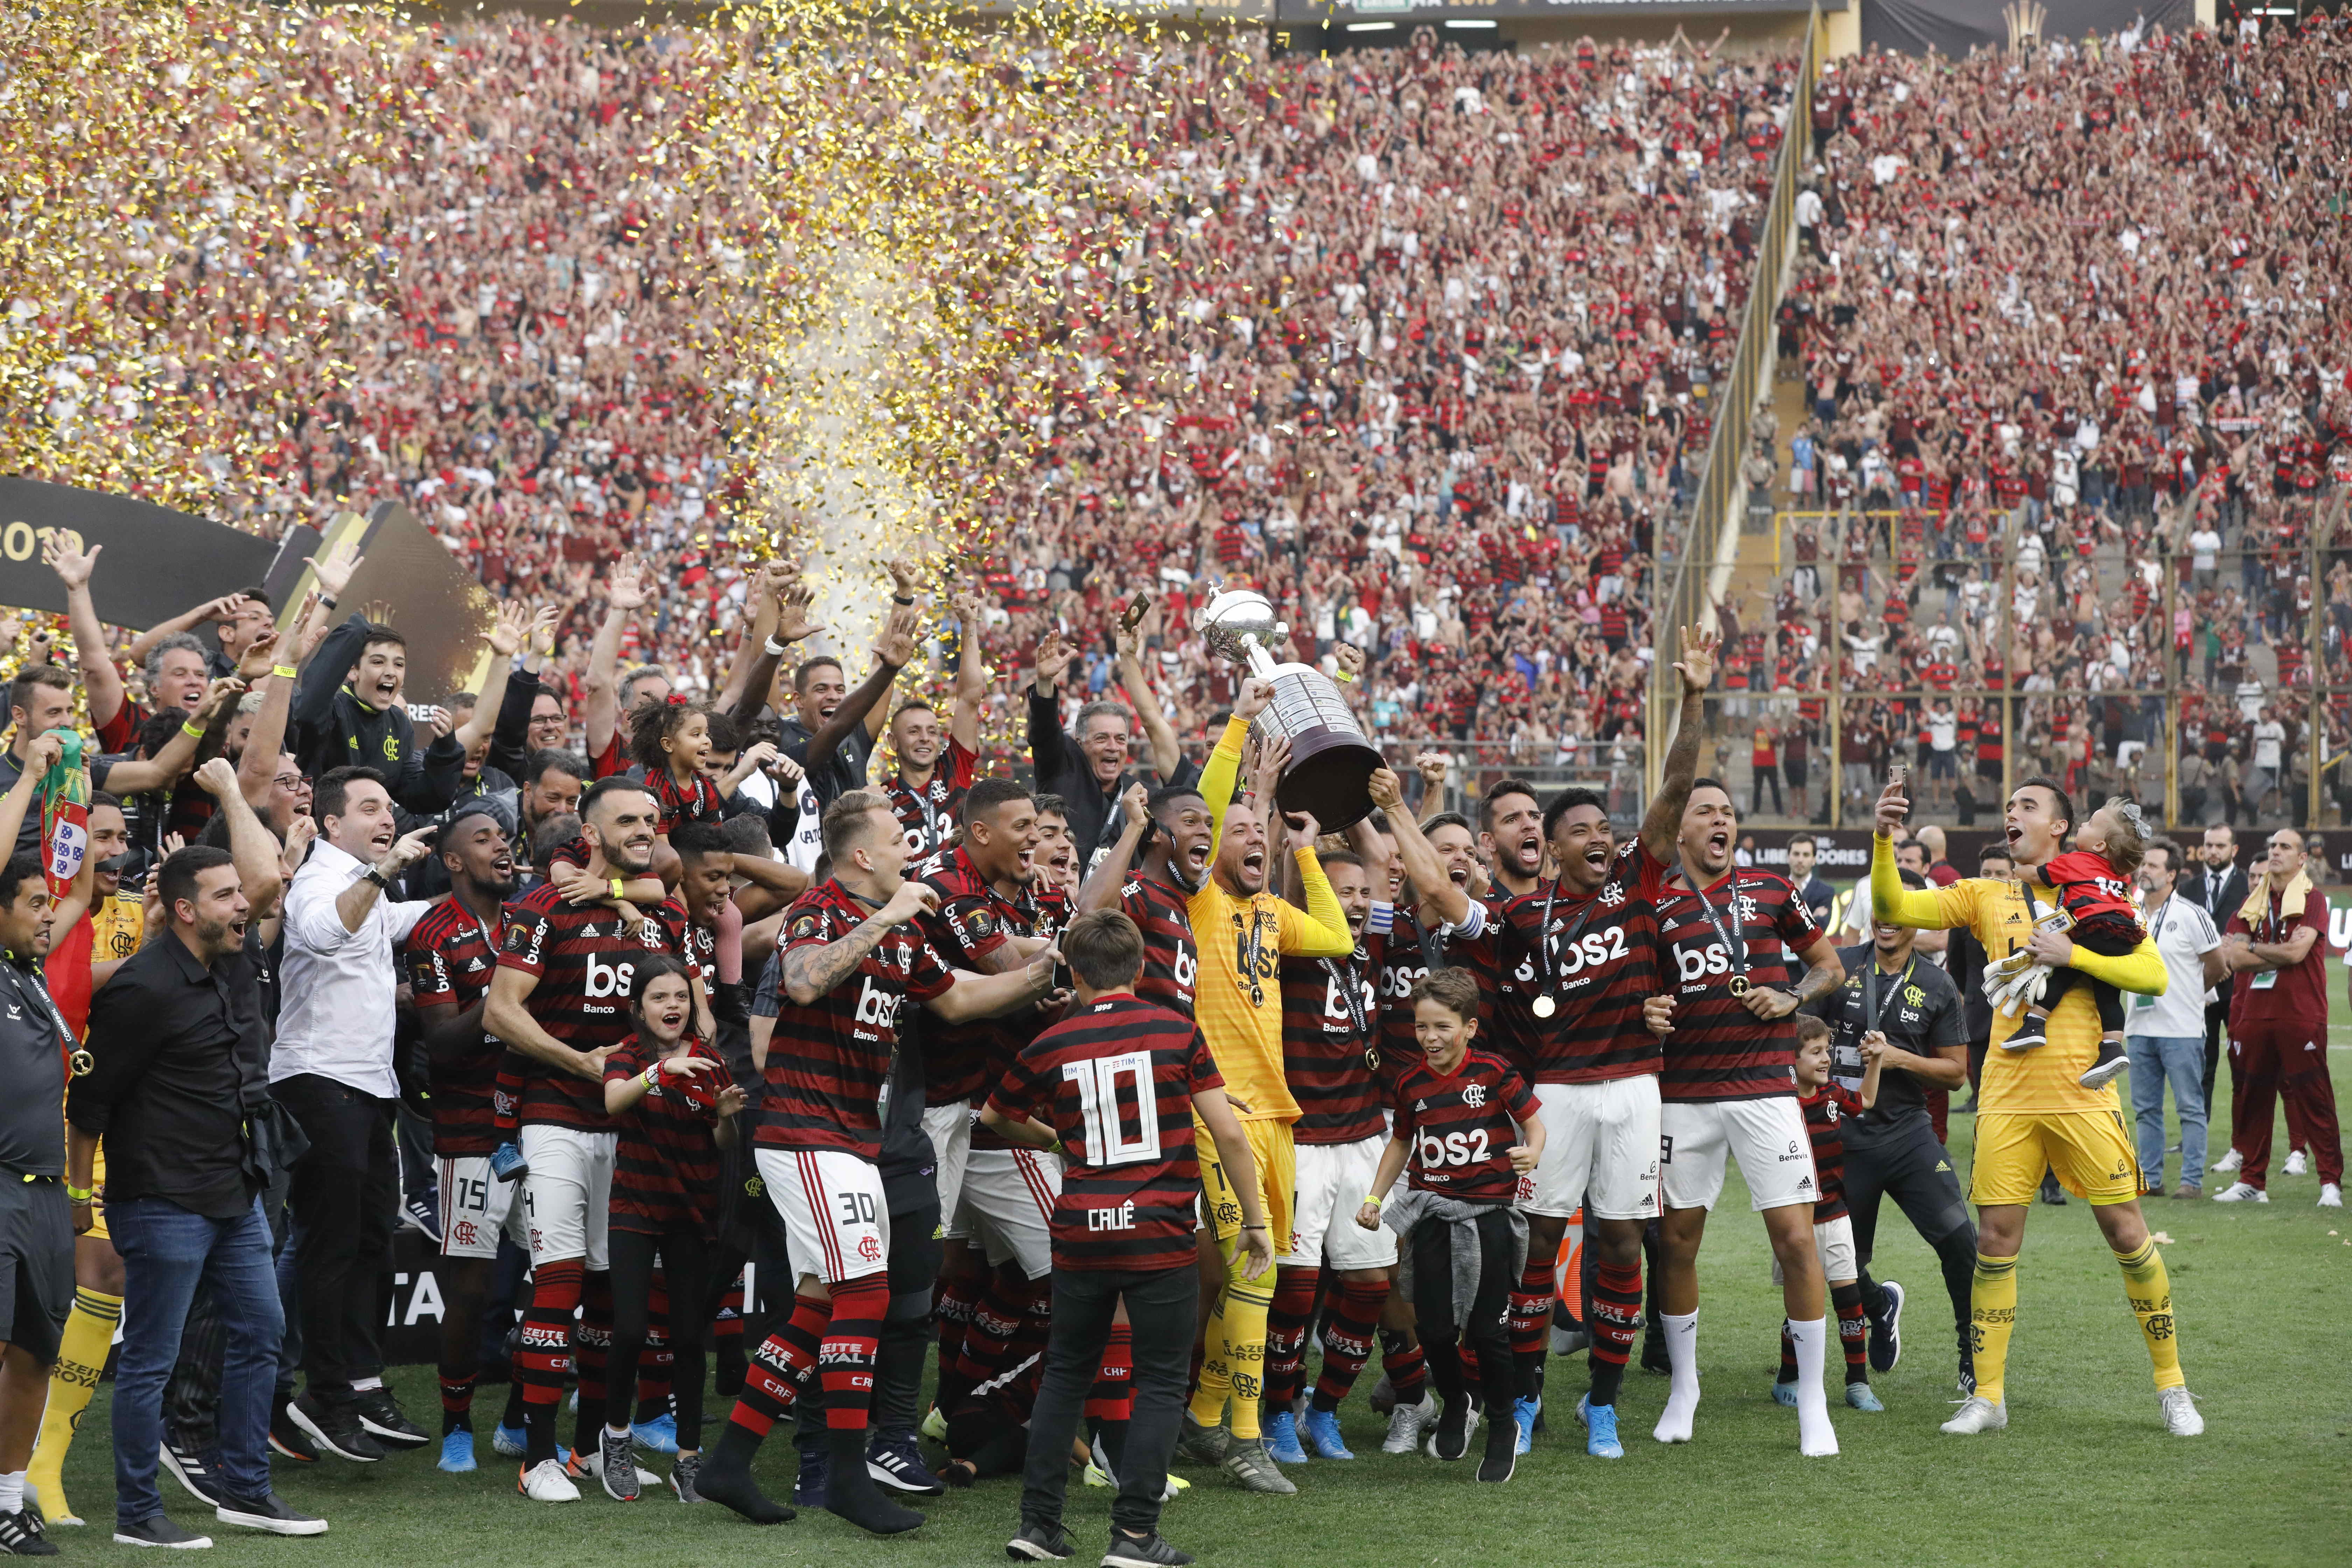 River Plate's Copa Libertadores triumph was their most recent triumph. Image: PA Images